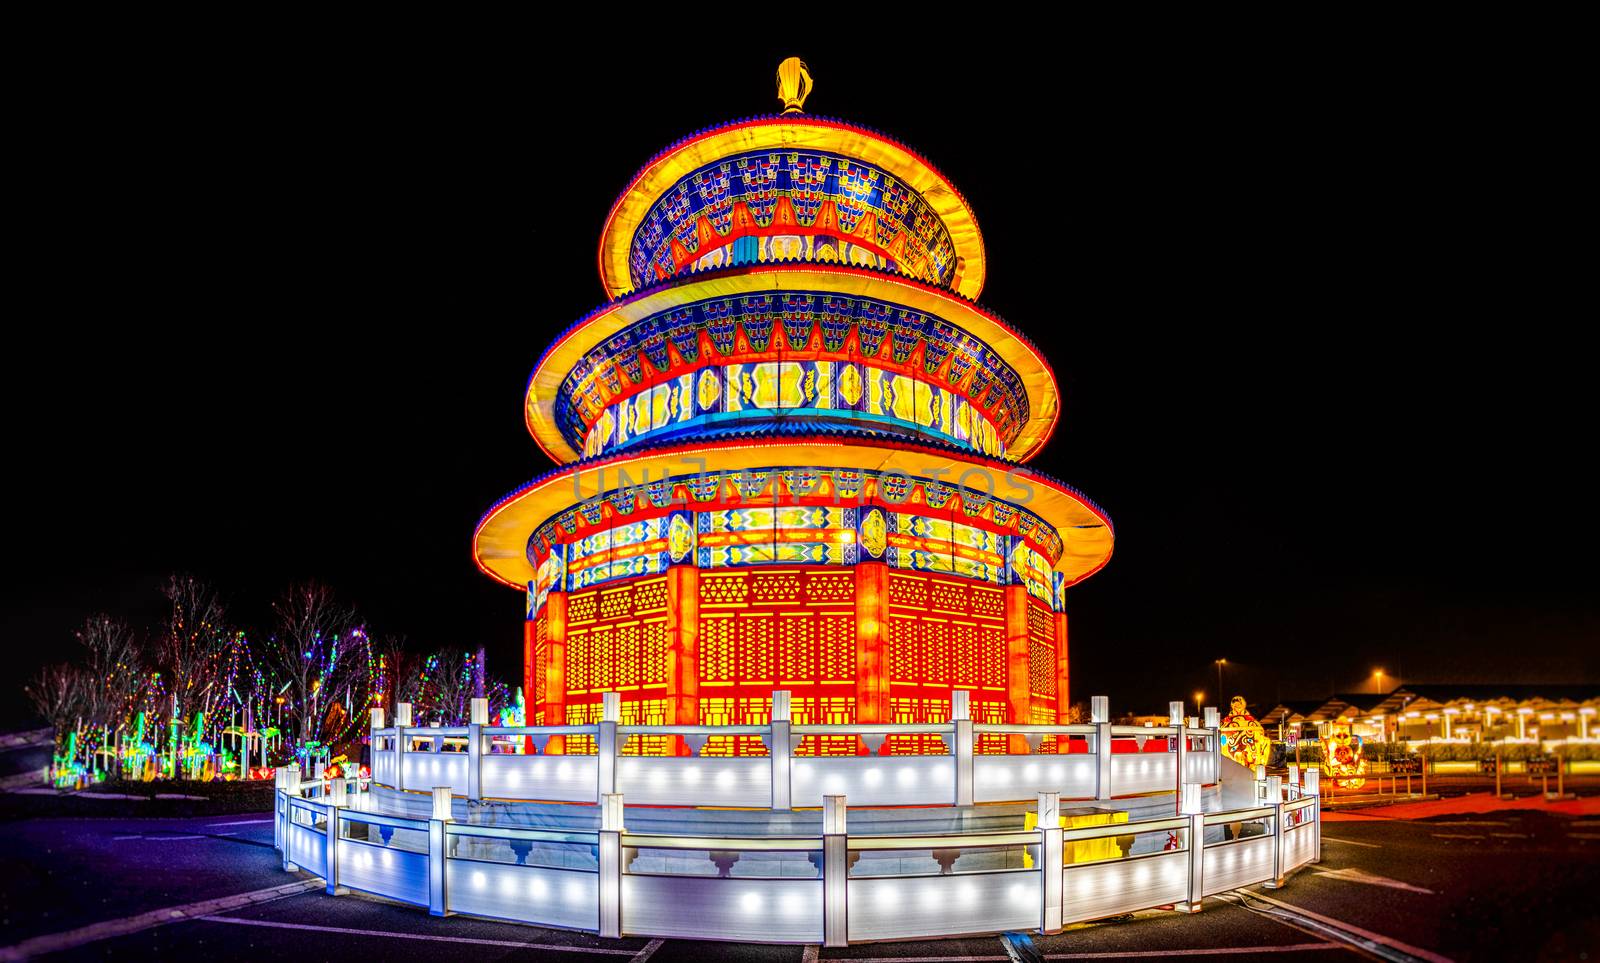 pagoda lantern festival by night with beatiful chinese light decorations .